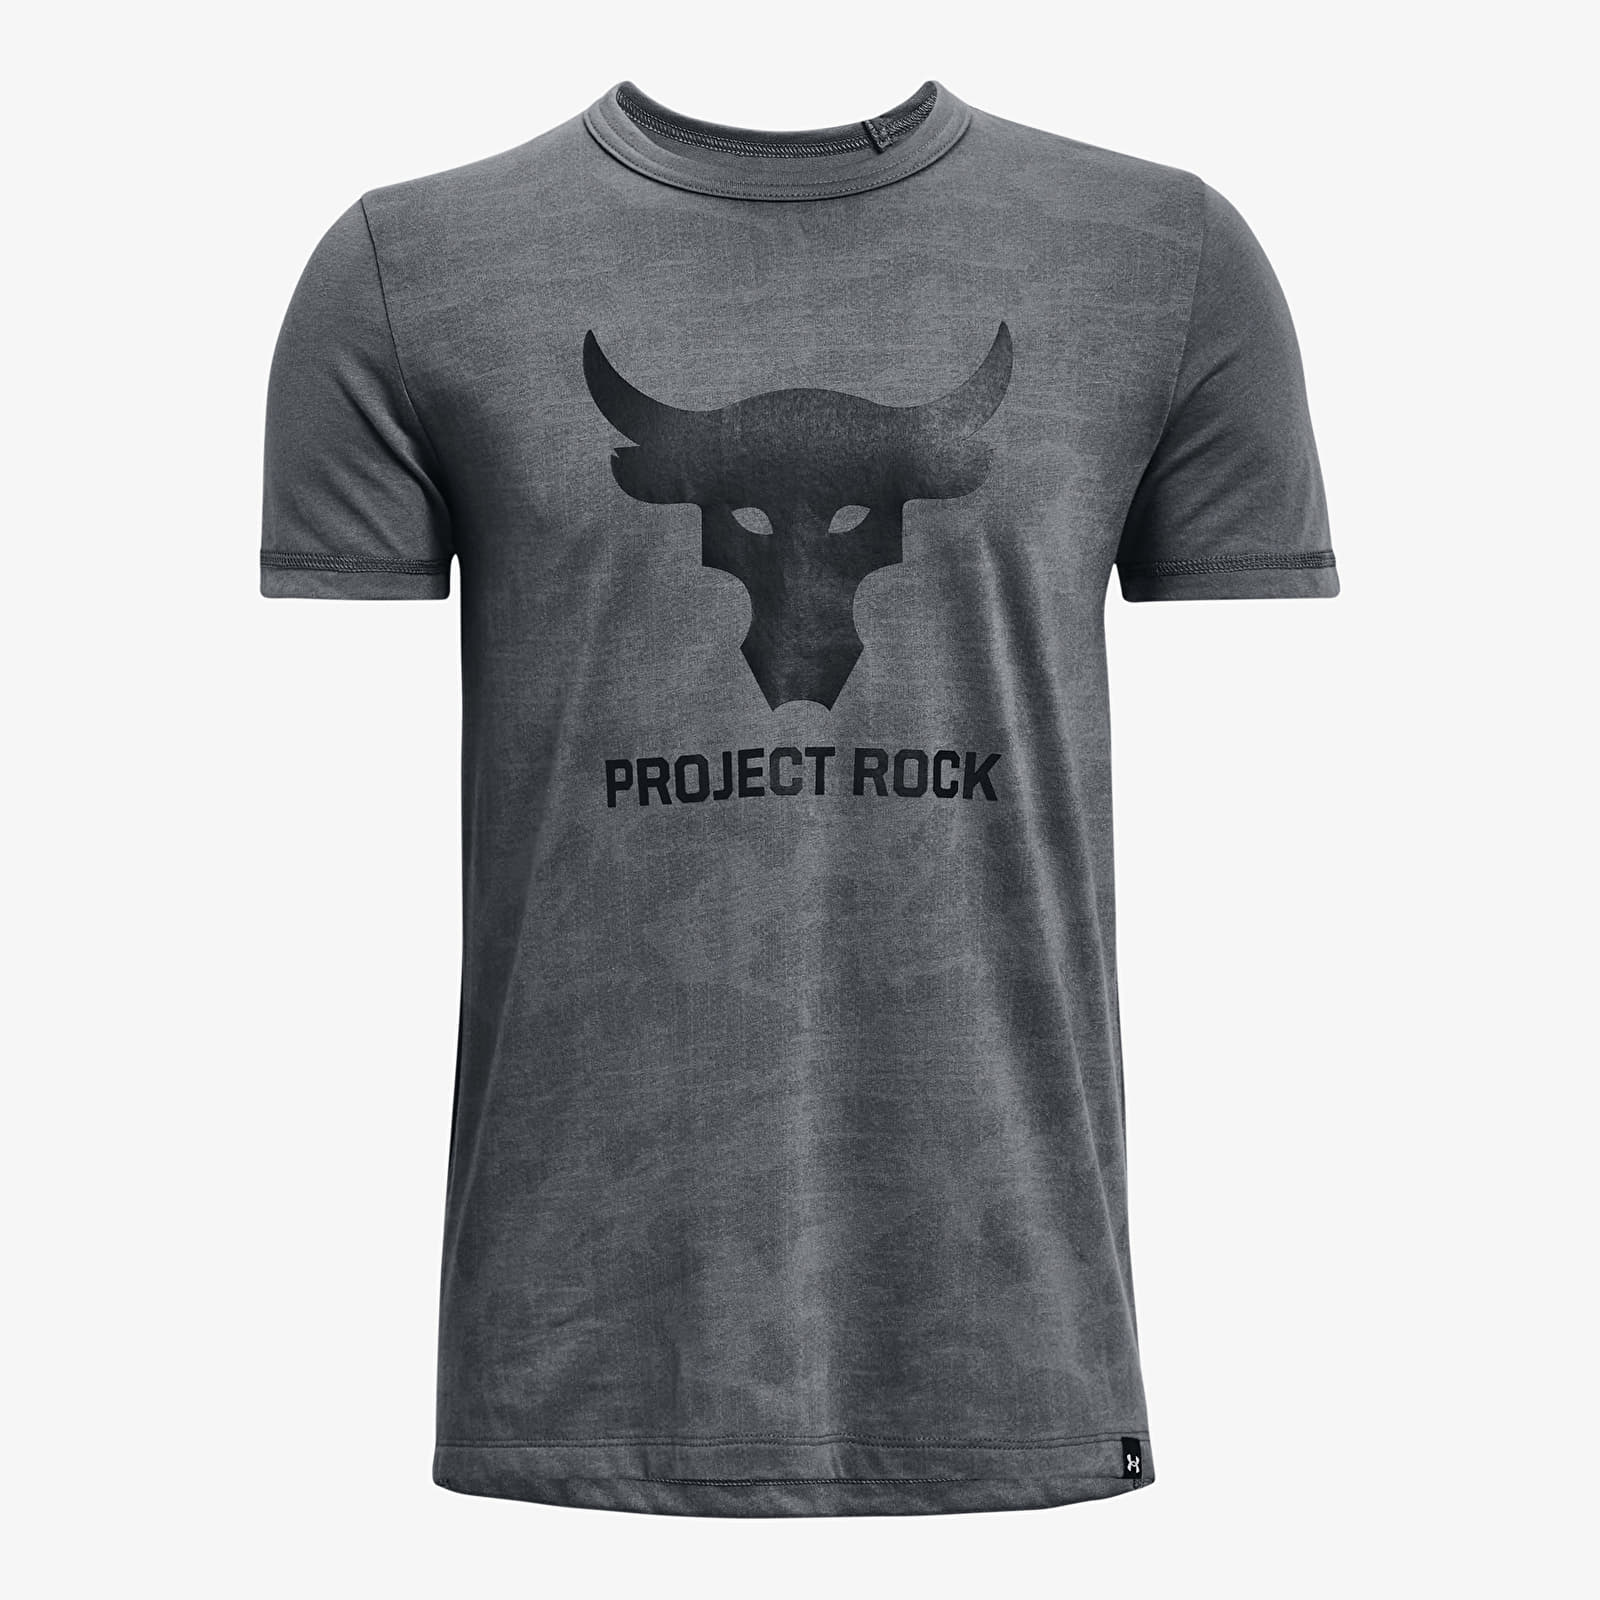 Îmbrăcăminte pentru copii Under Armour Y Project Rock Show Your Grid Short Sleeve Pitch Grey/ Black